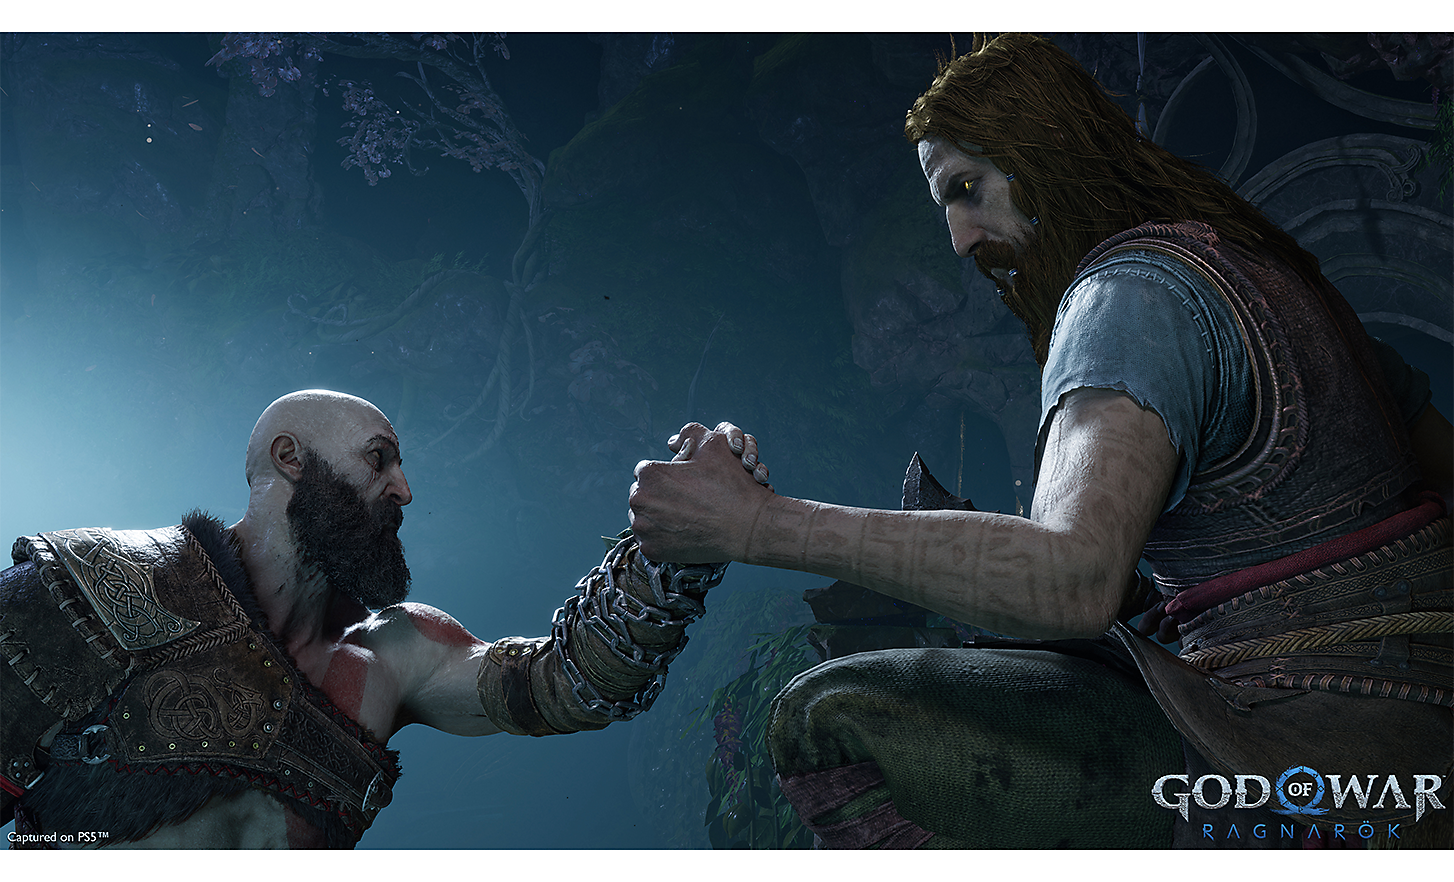 Scene from God of War: Ragnarök showing a handshake between two warriors